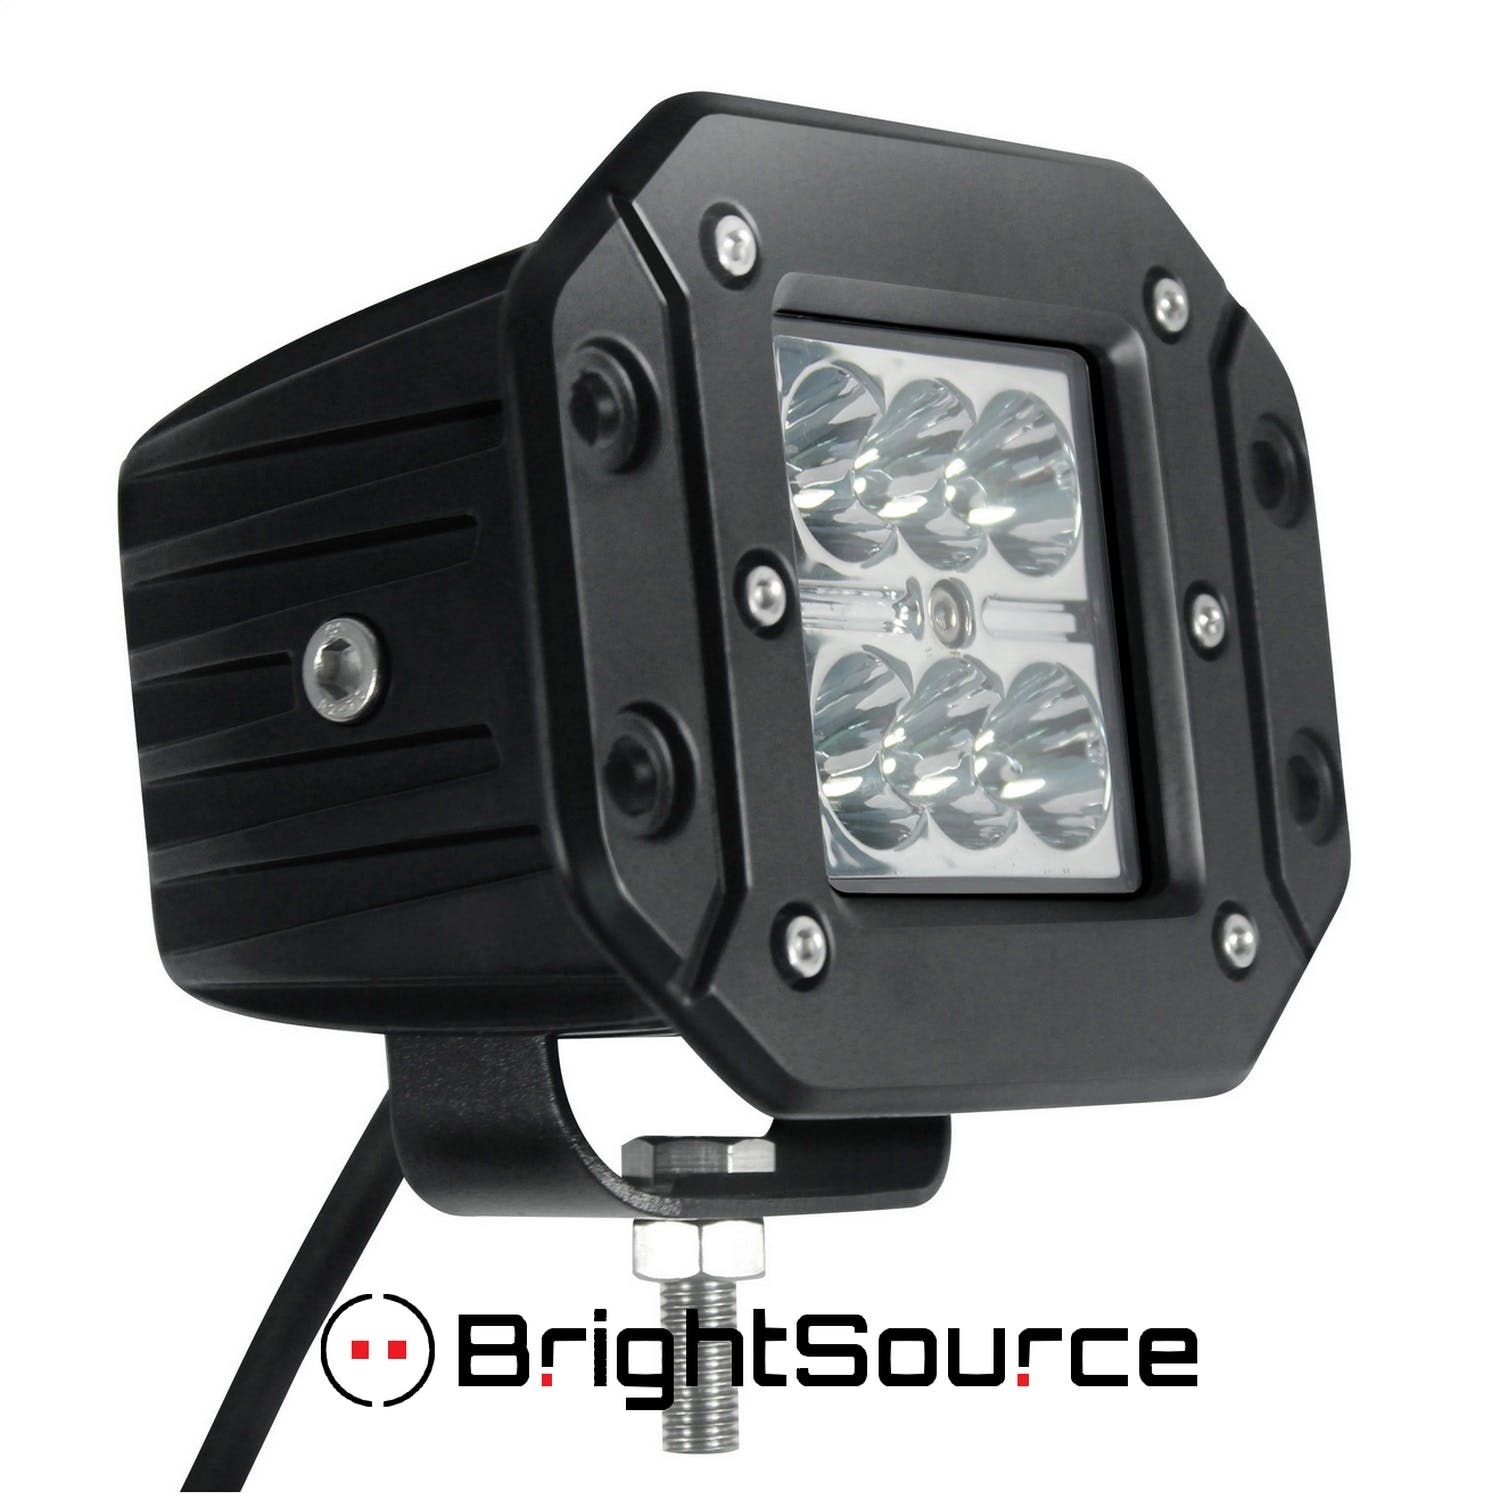 BrightSource 76002F Cube Light Kit